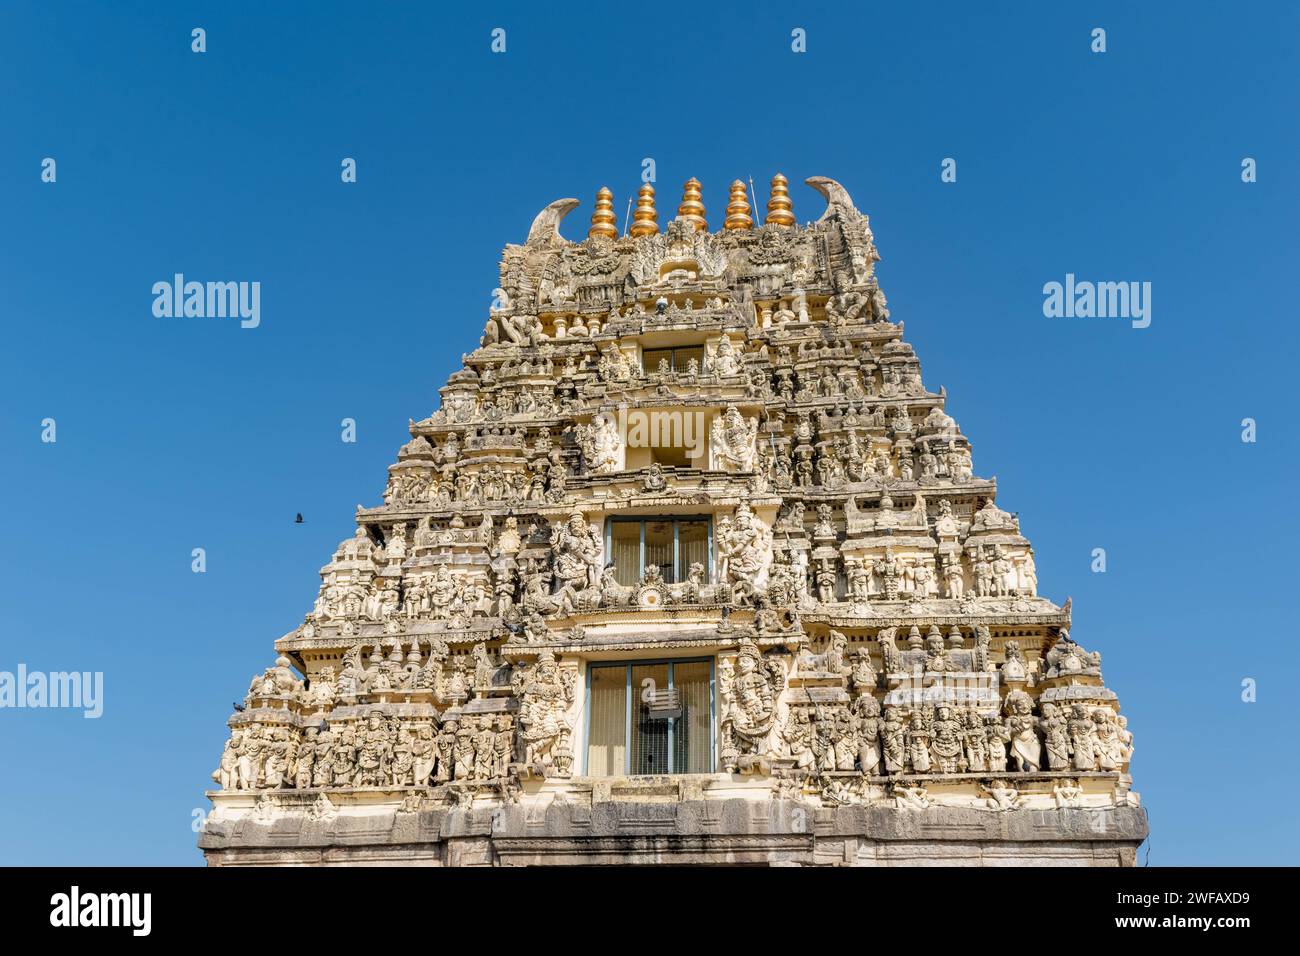 The gopuram tower of the historic Chennakeshava temple in the town of Belur in Karnataka. Stock Photo